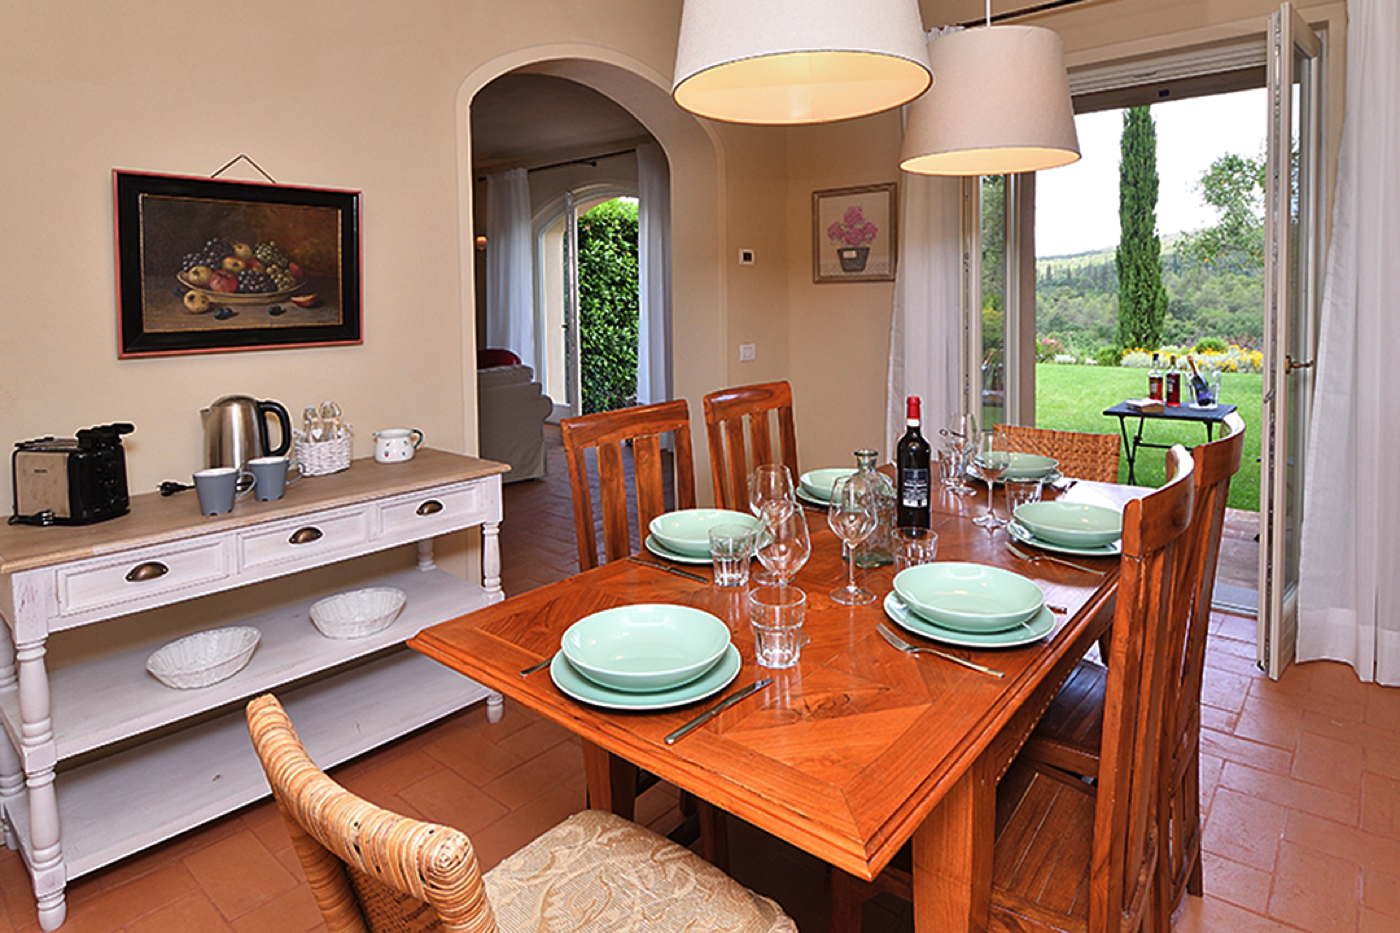 self catering villa-rental villa-holiday rental-vacation villa in Itay-Tuscany